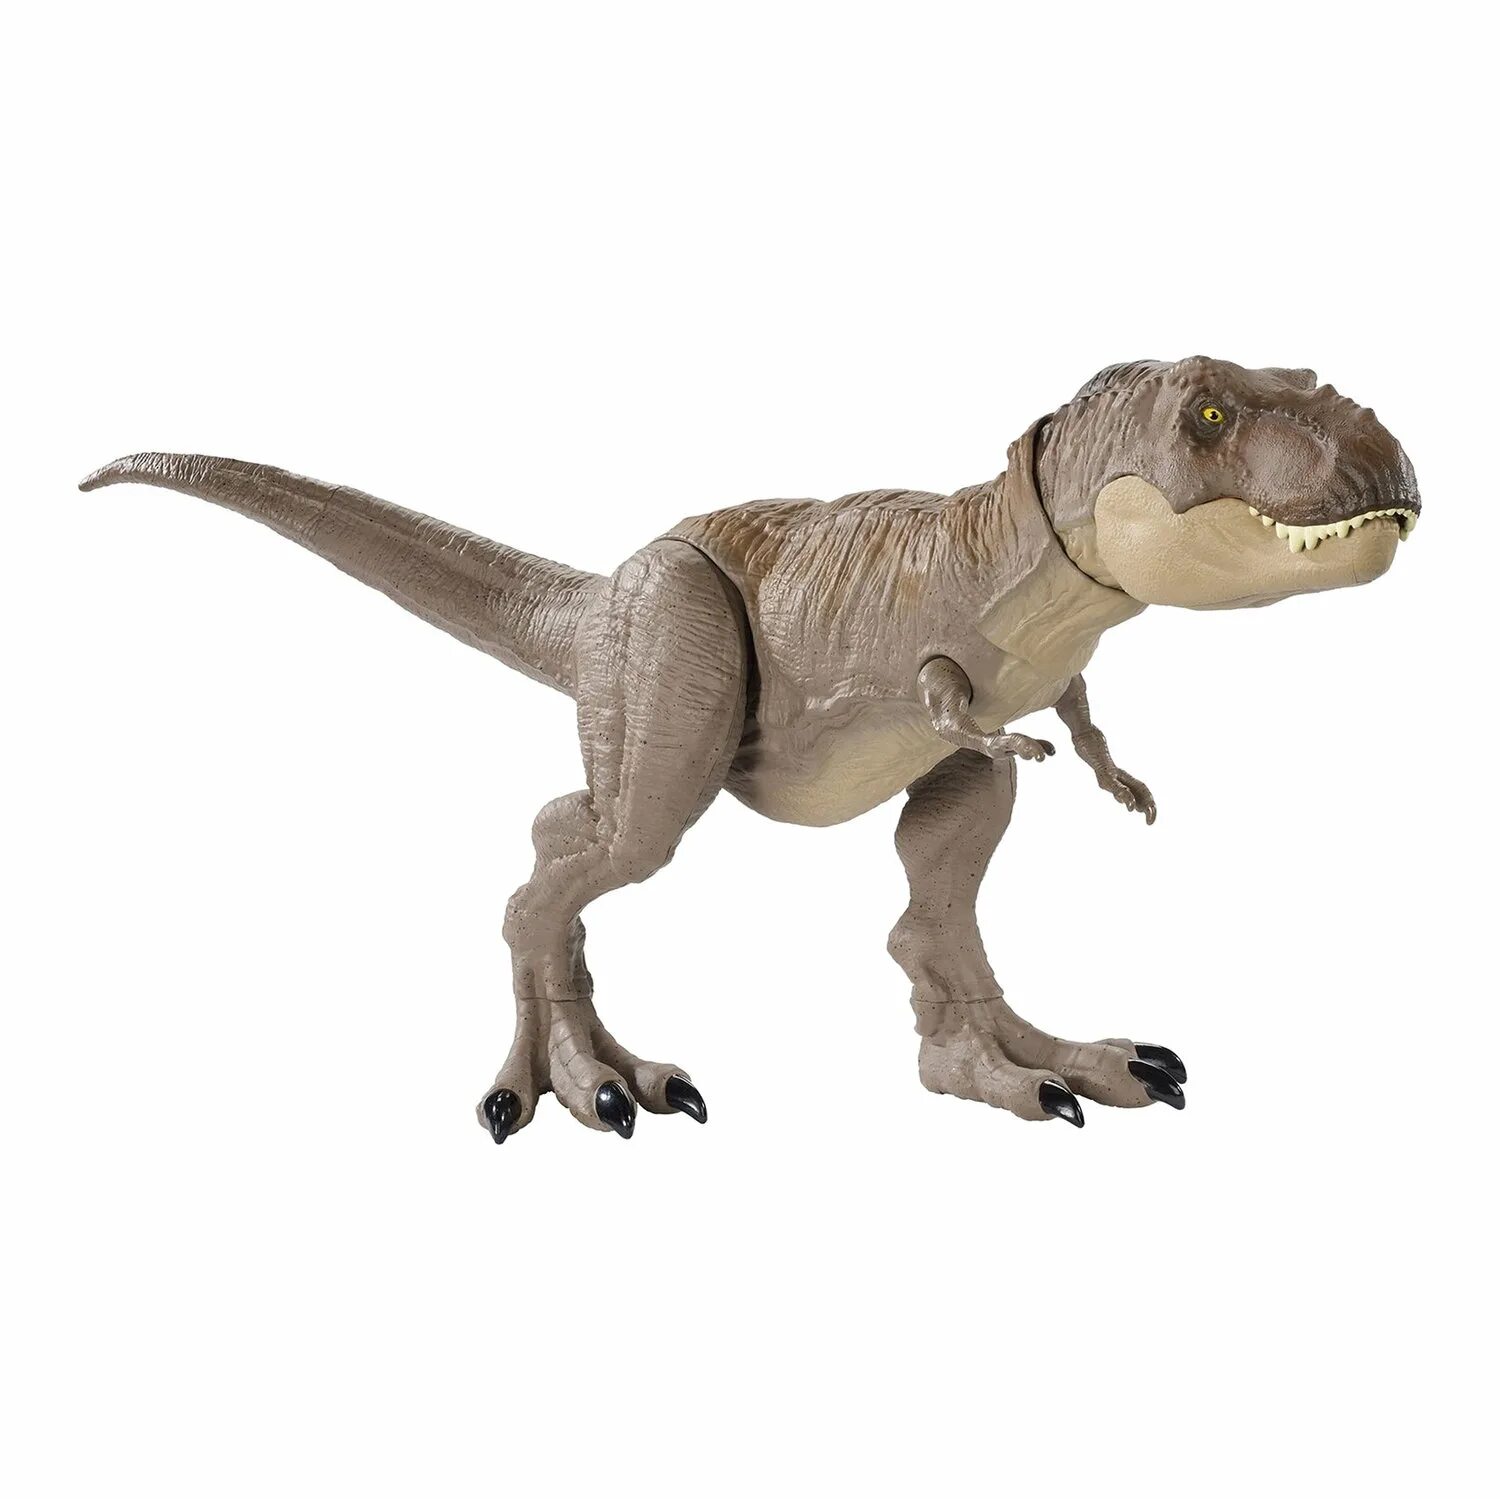 Игрушка Jurassic World t-Rex. Тиранозавр Jurassic World Mattel. Фигурка динозавра Jurassic World Тиранозавр рекс. Игрушка Тиранозавр рекс Jurassic World.